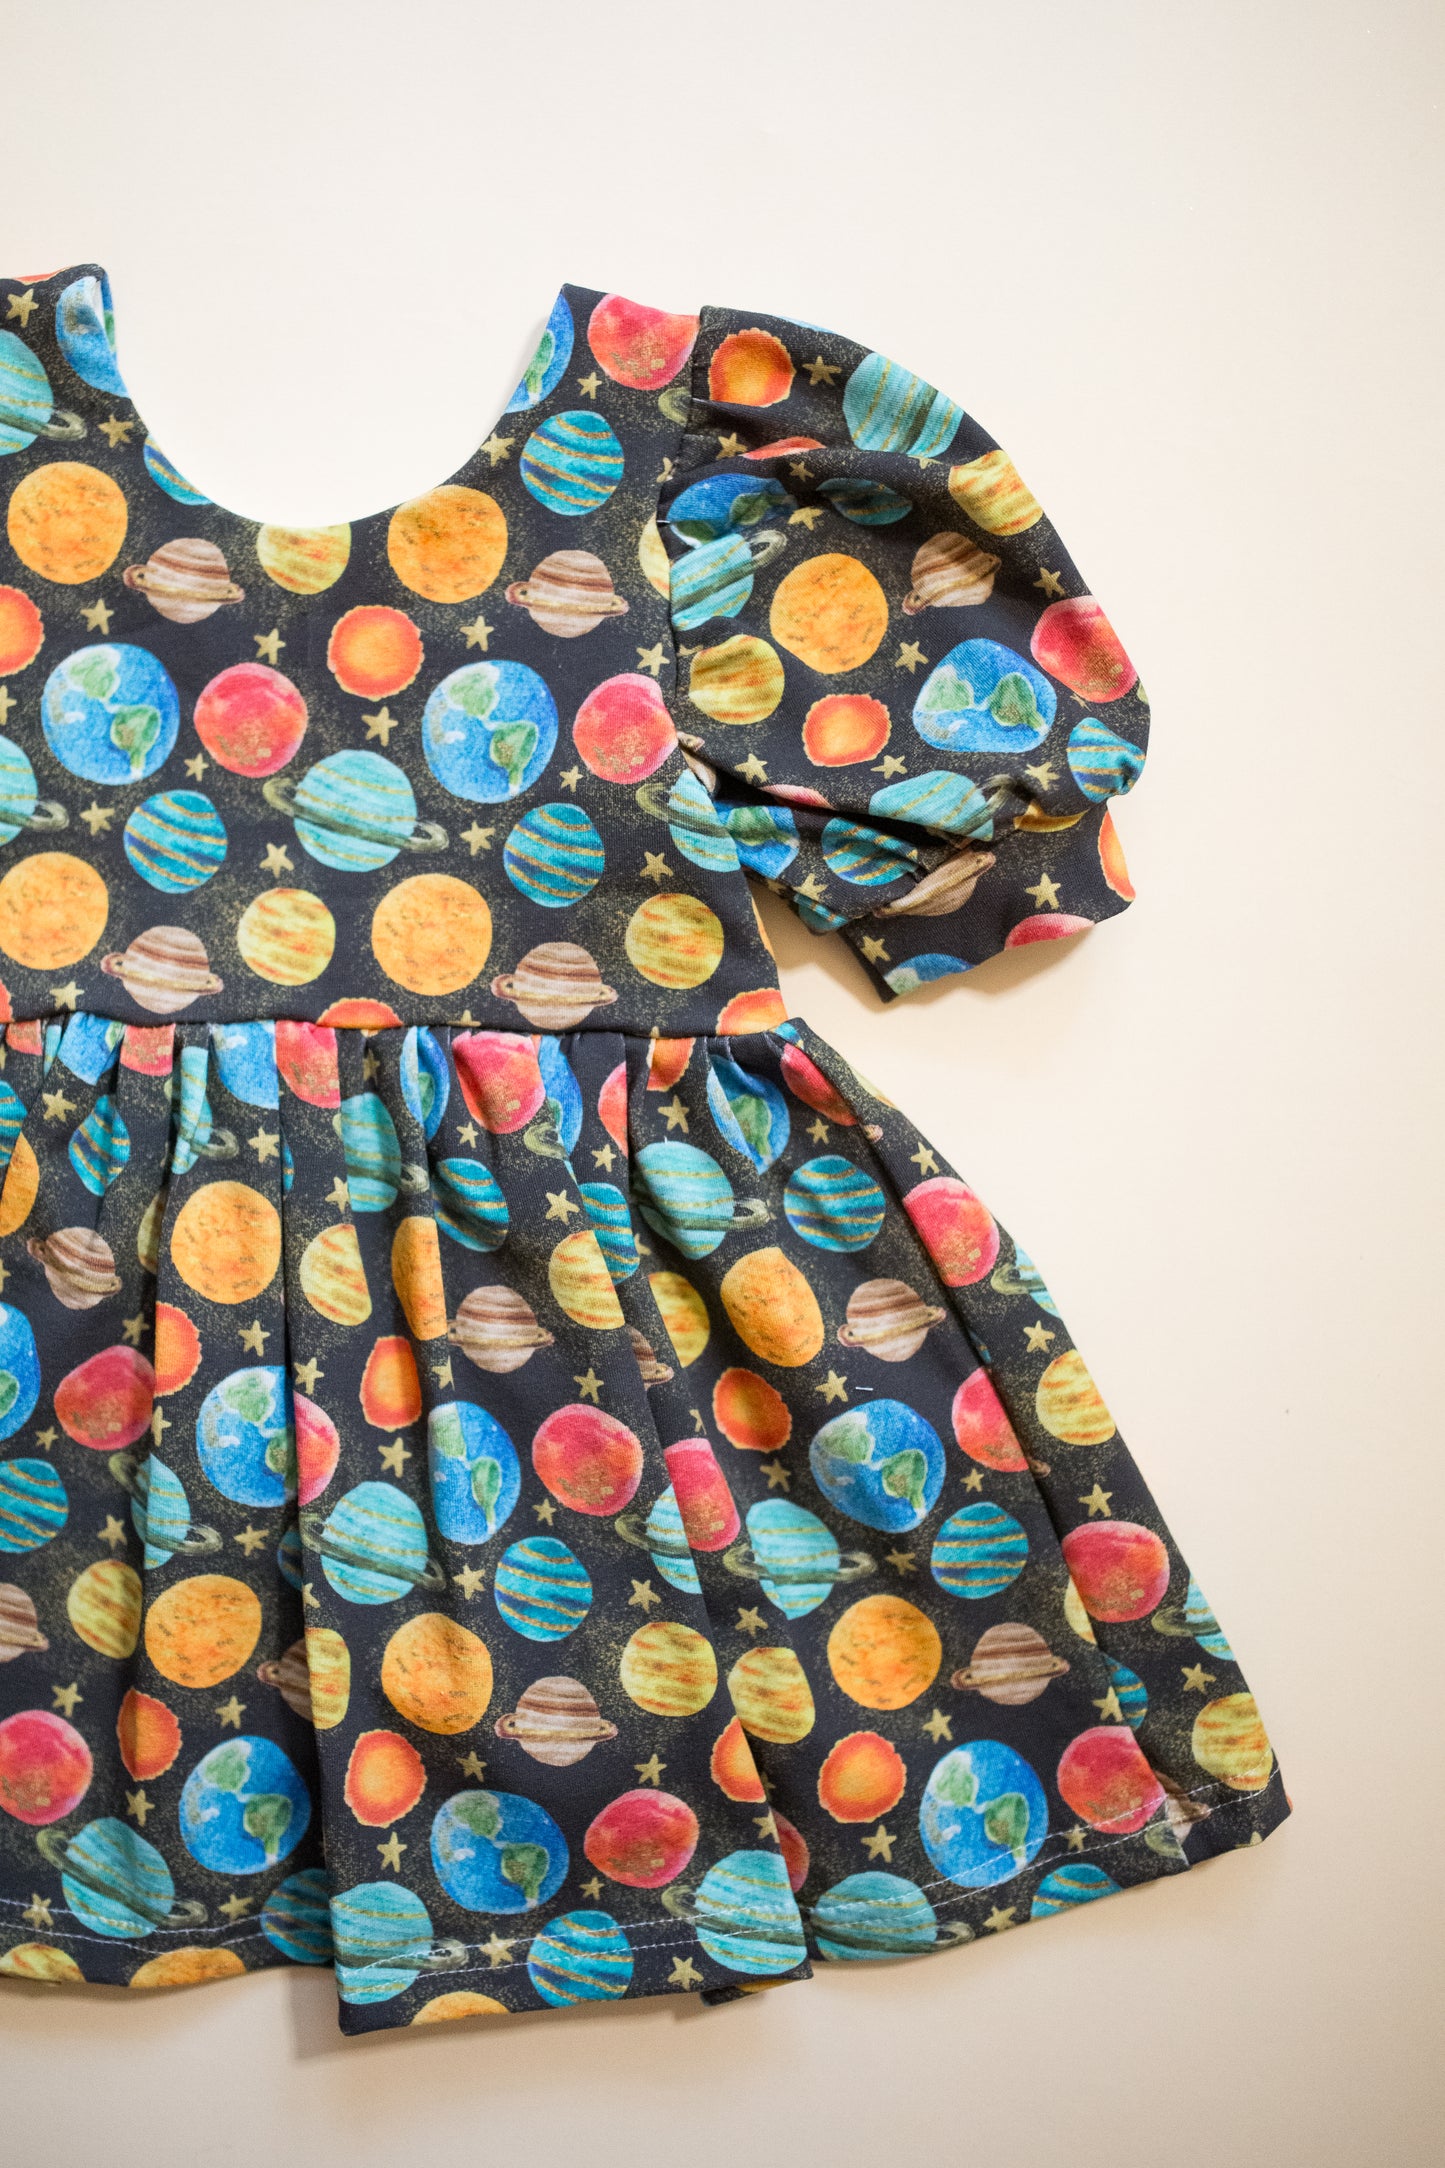 Space Dress